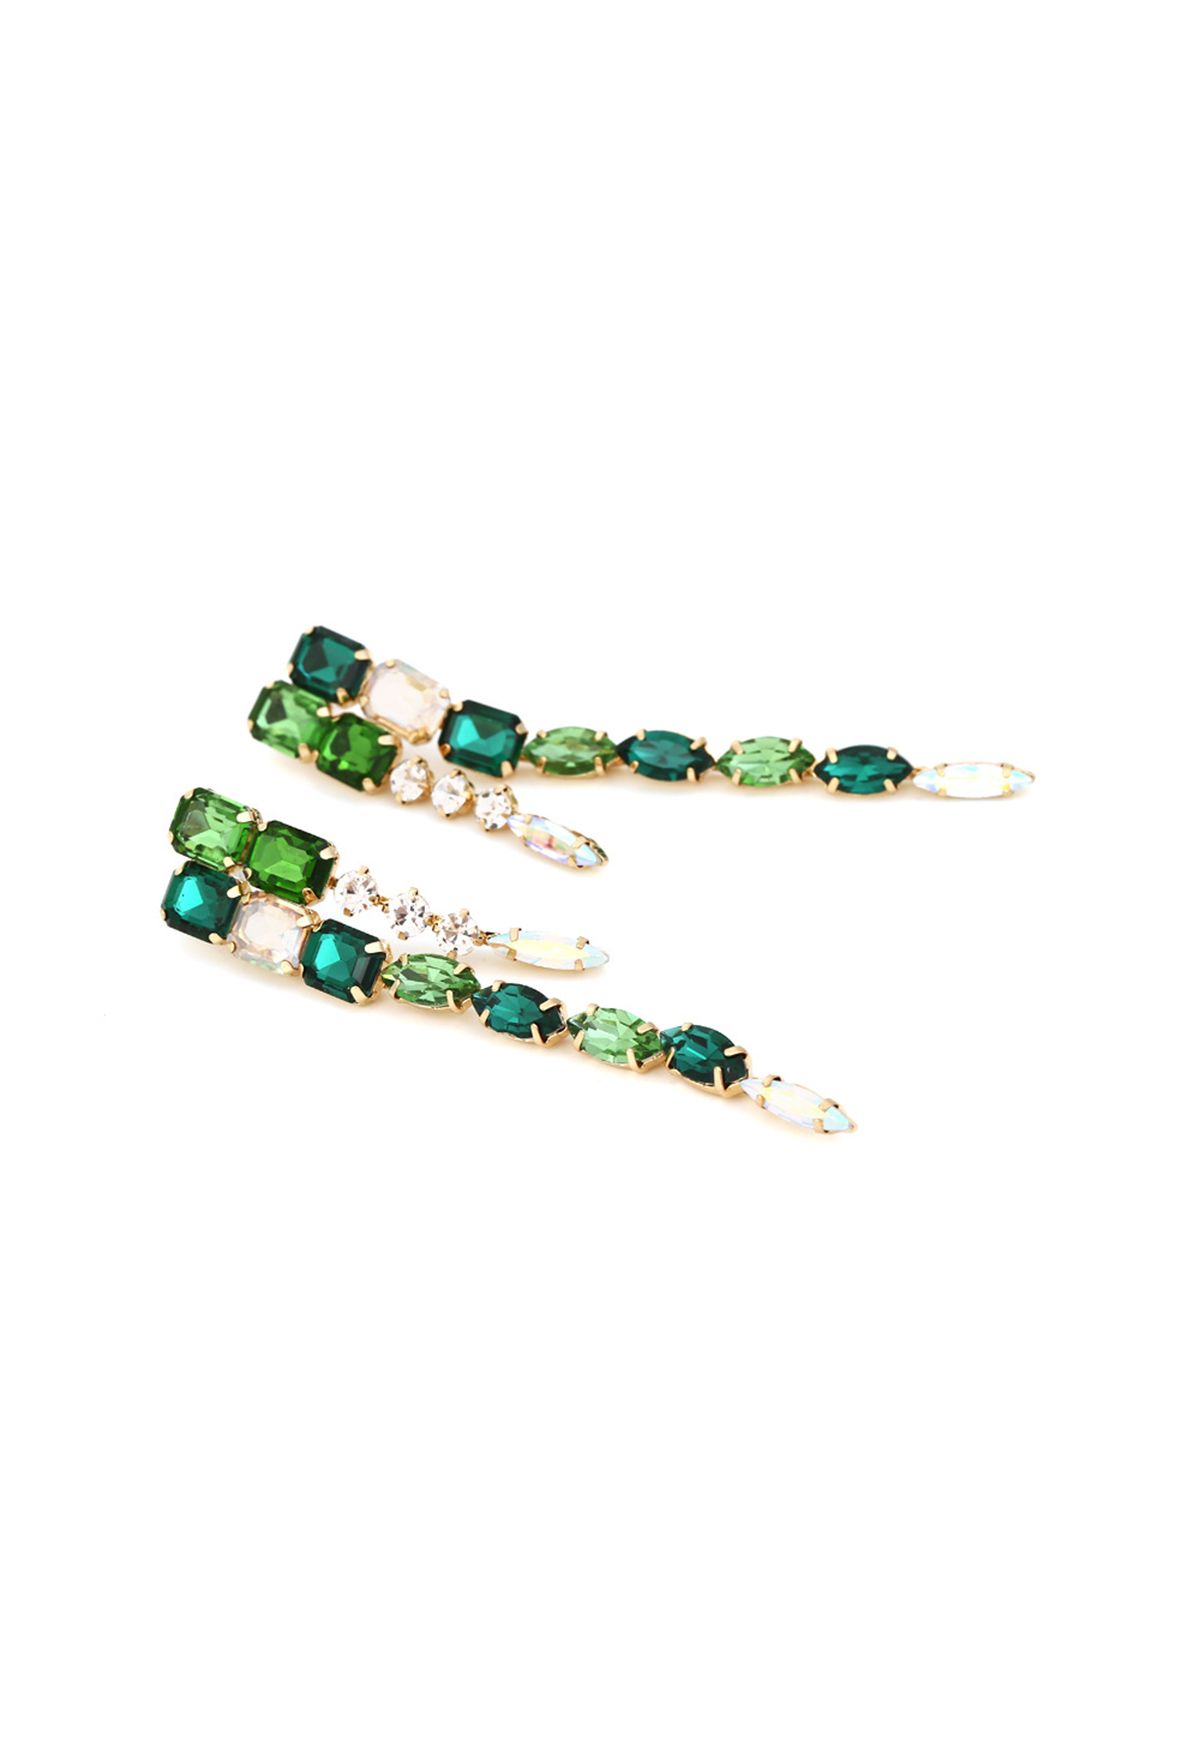 Connecting Emerald Gem Long Dangle Earrings